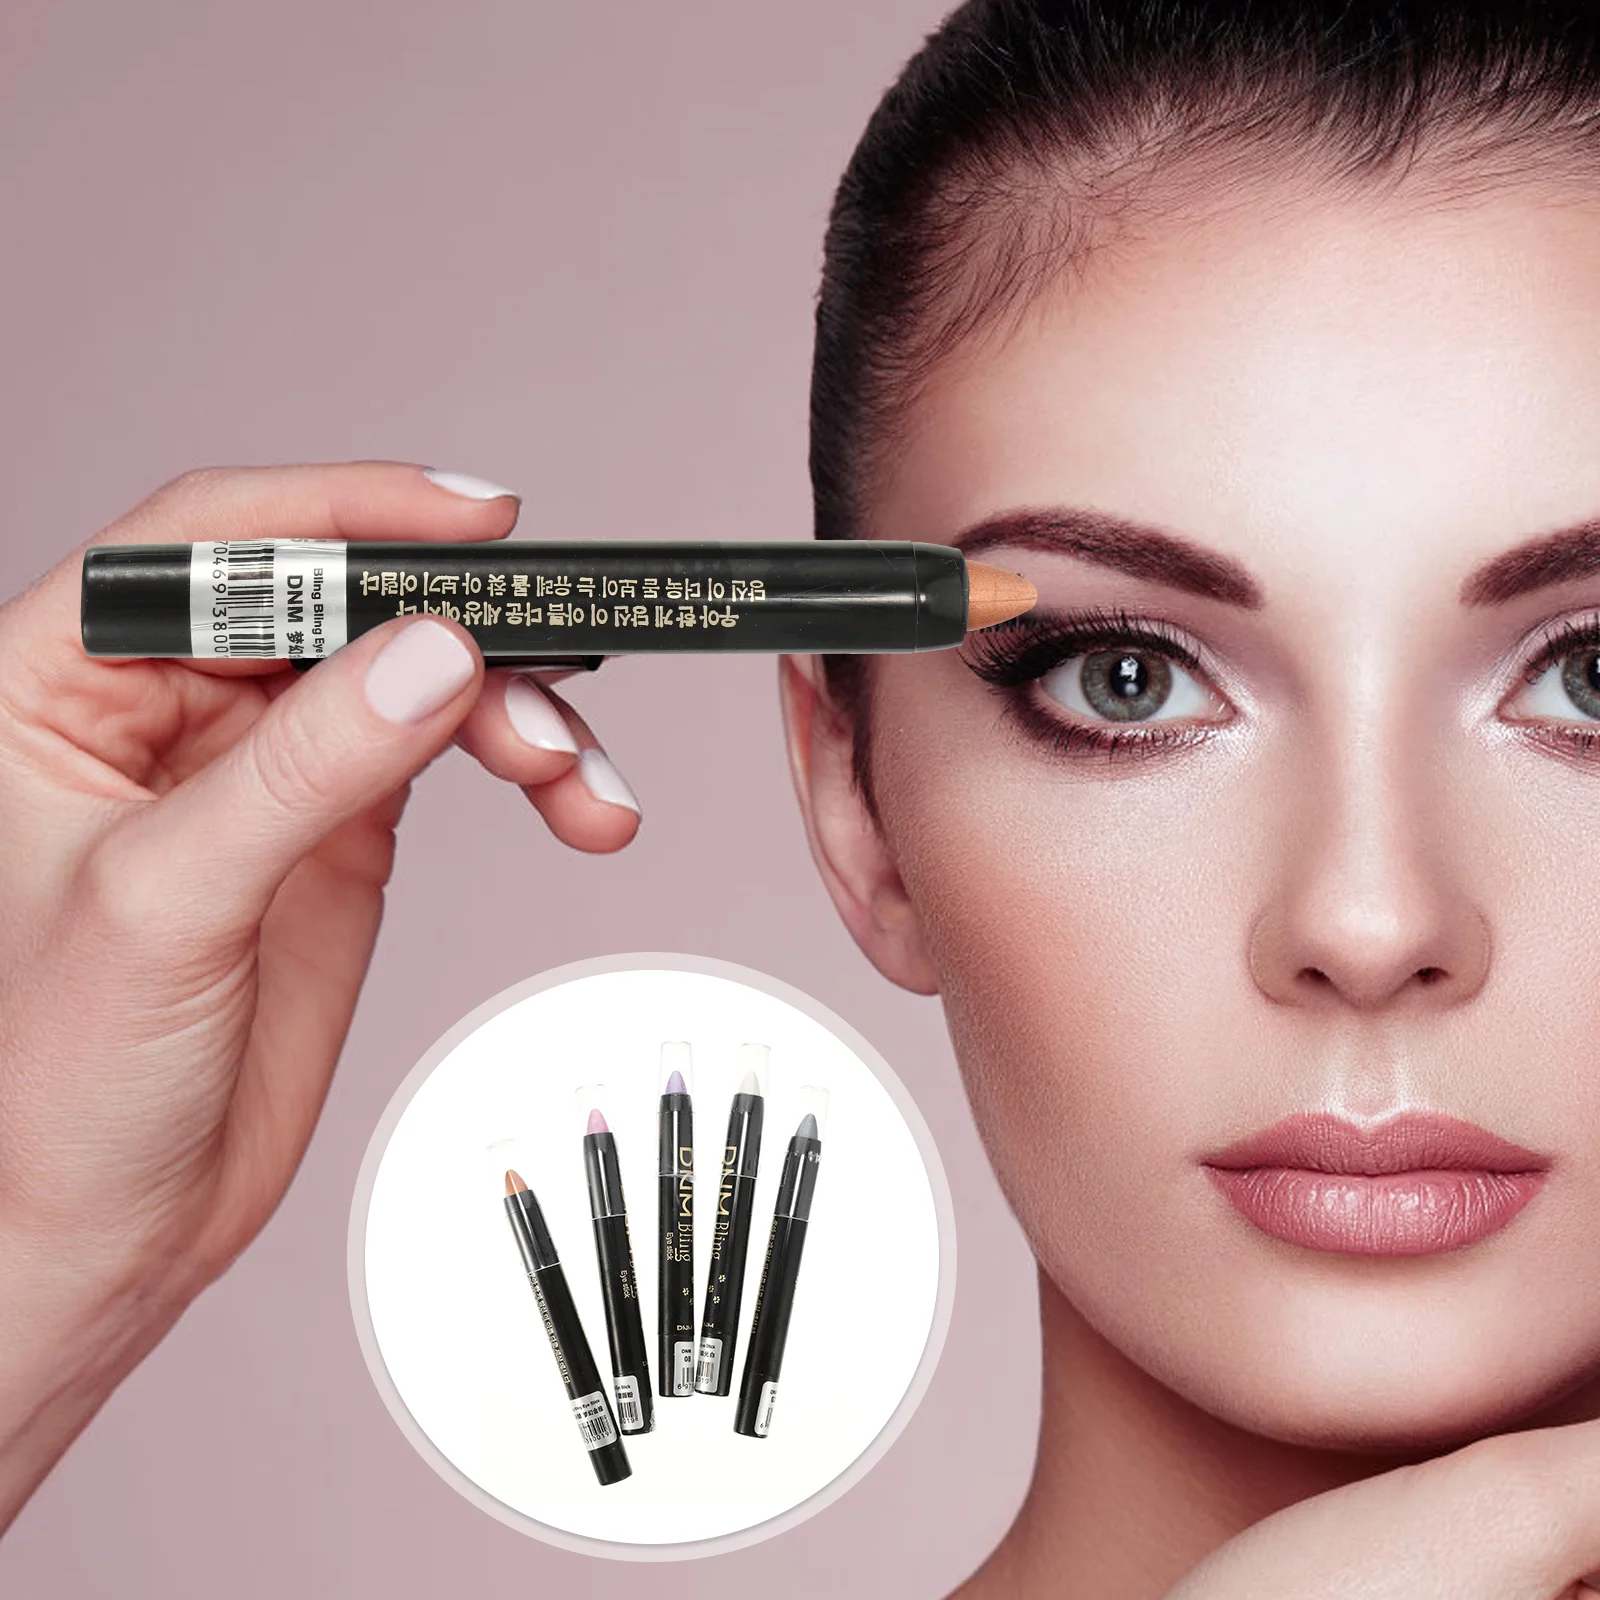 

Pens Eyeshadow Stick Makeup Eyeliner Eye Girl Glitter Pen Supplies Colored Crayons Sticks Shiny Tools Shadow Shimmer